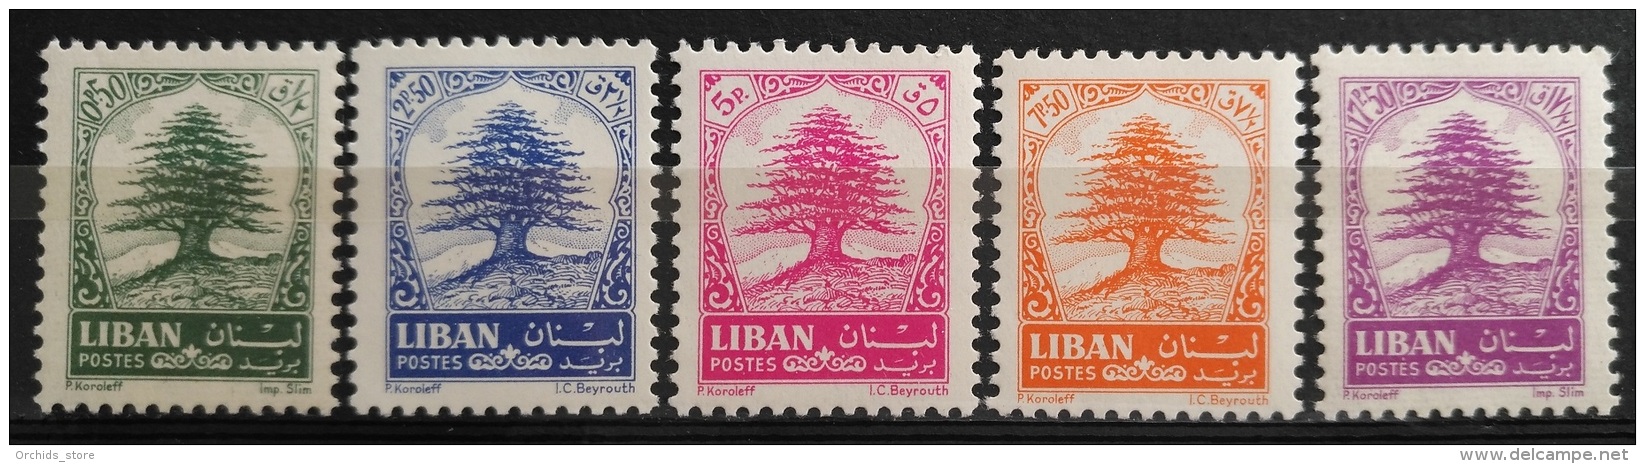 Lebanon 1964 Mi. A838-842 Cplte Set 5v. MNH - Cedar Tree - Lebanon